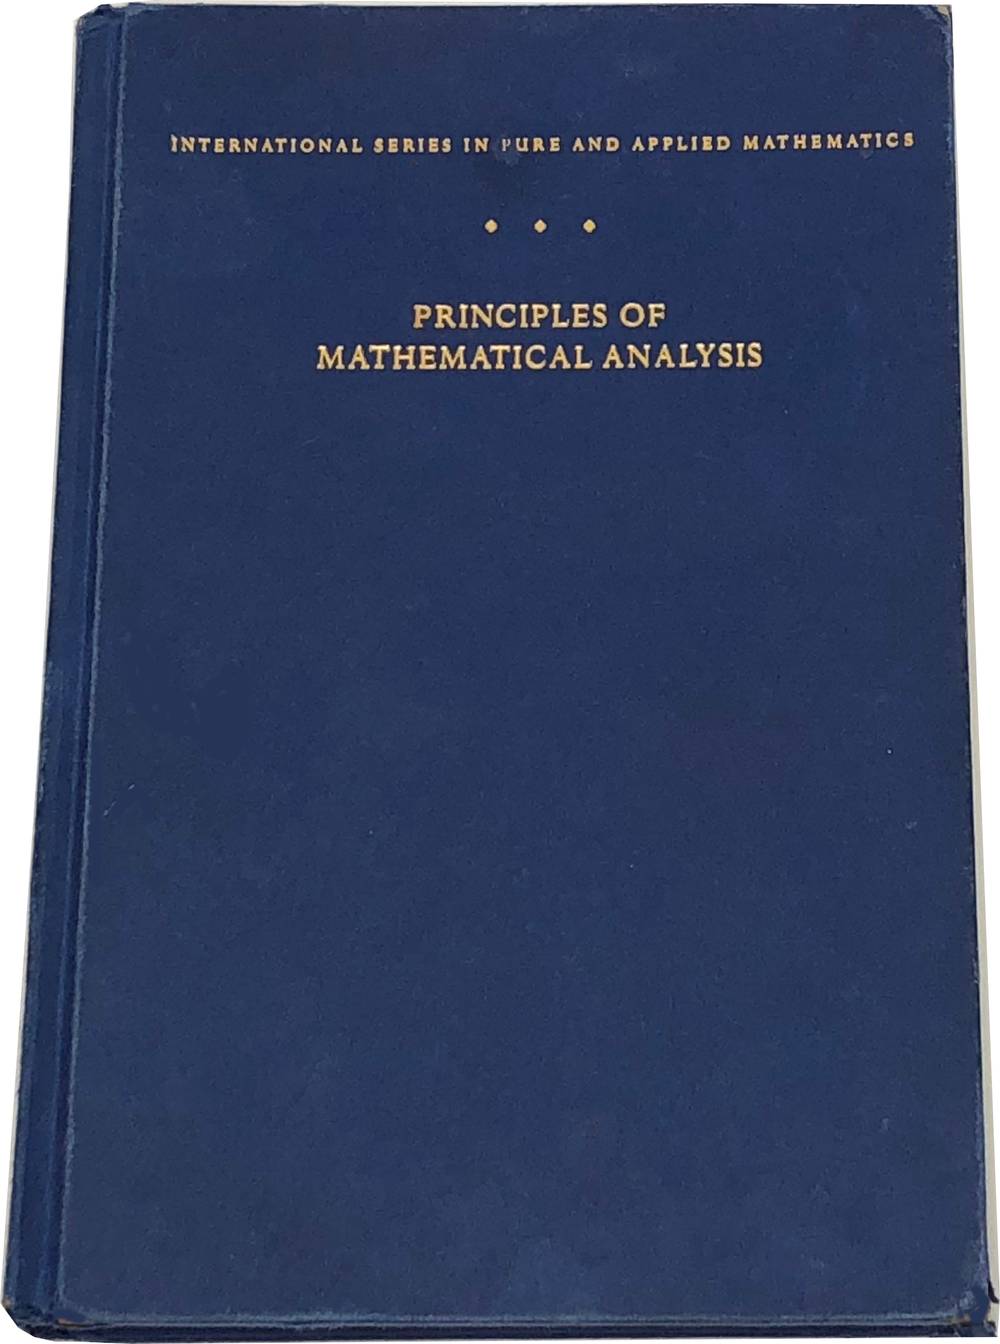 Book image of Principles of Mathematical Analysis.